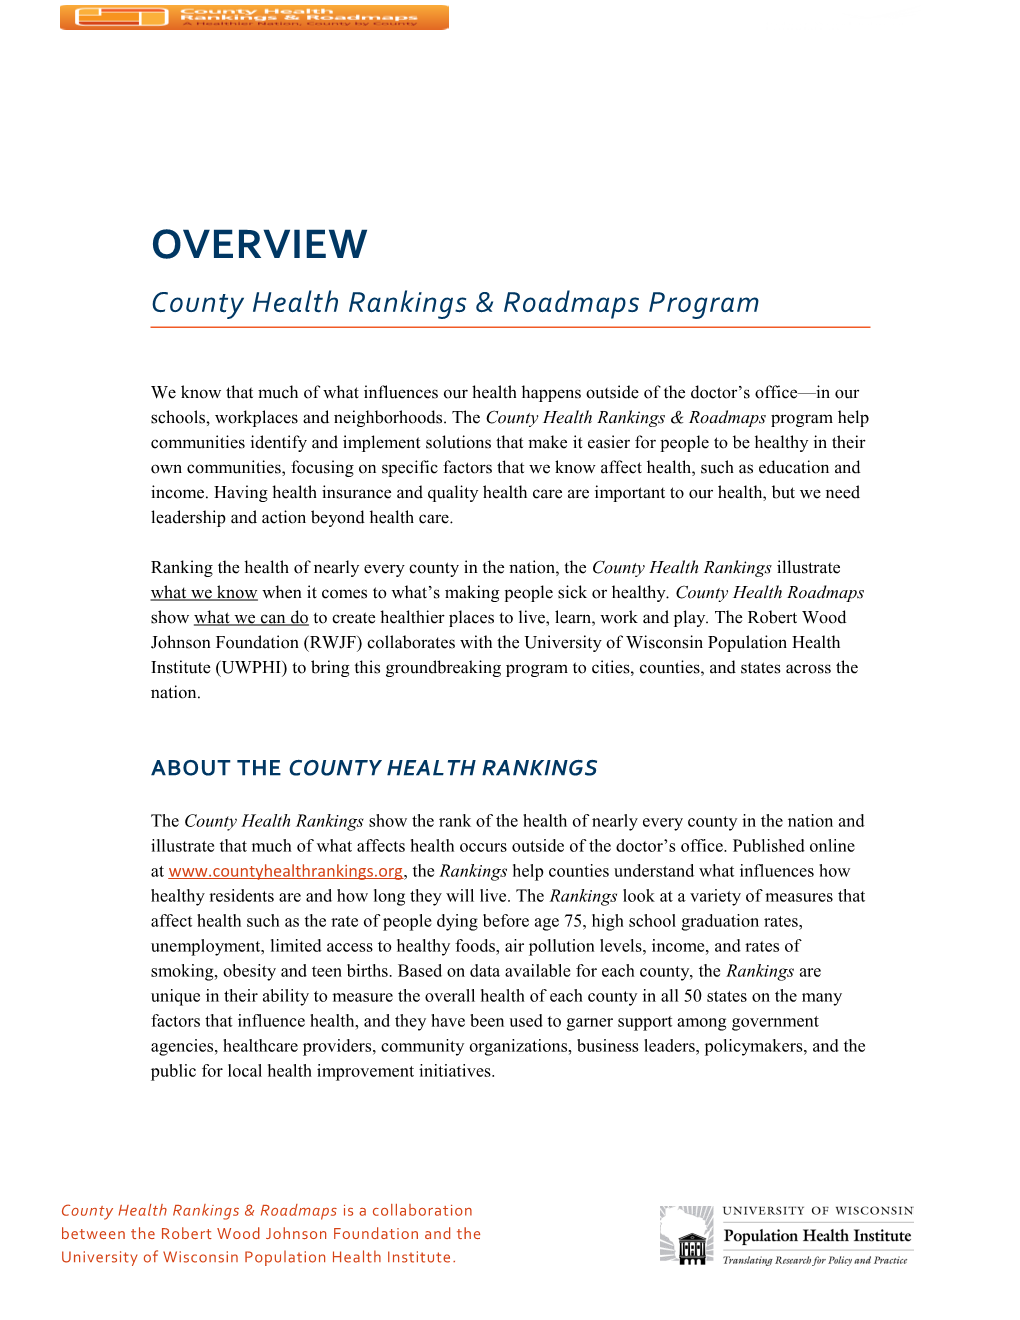 County Health Rankings & Roadmaps Program